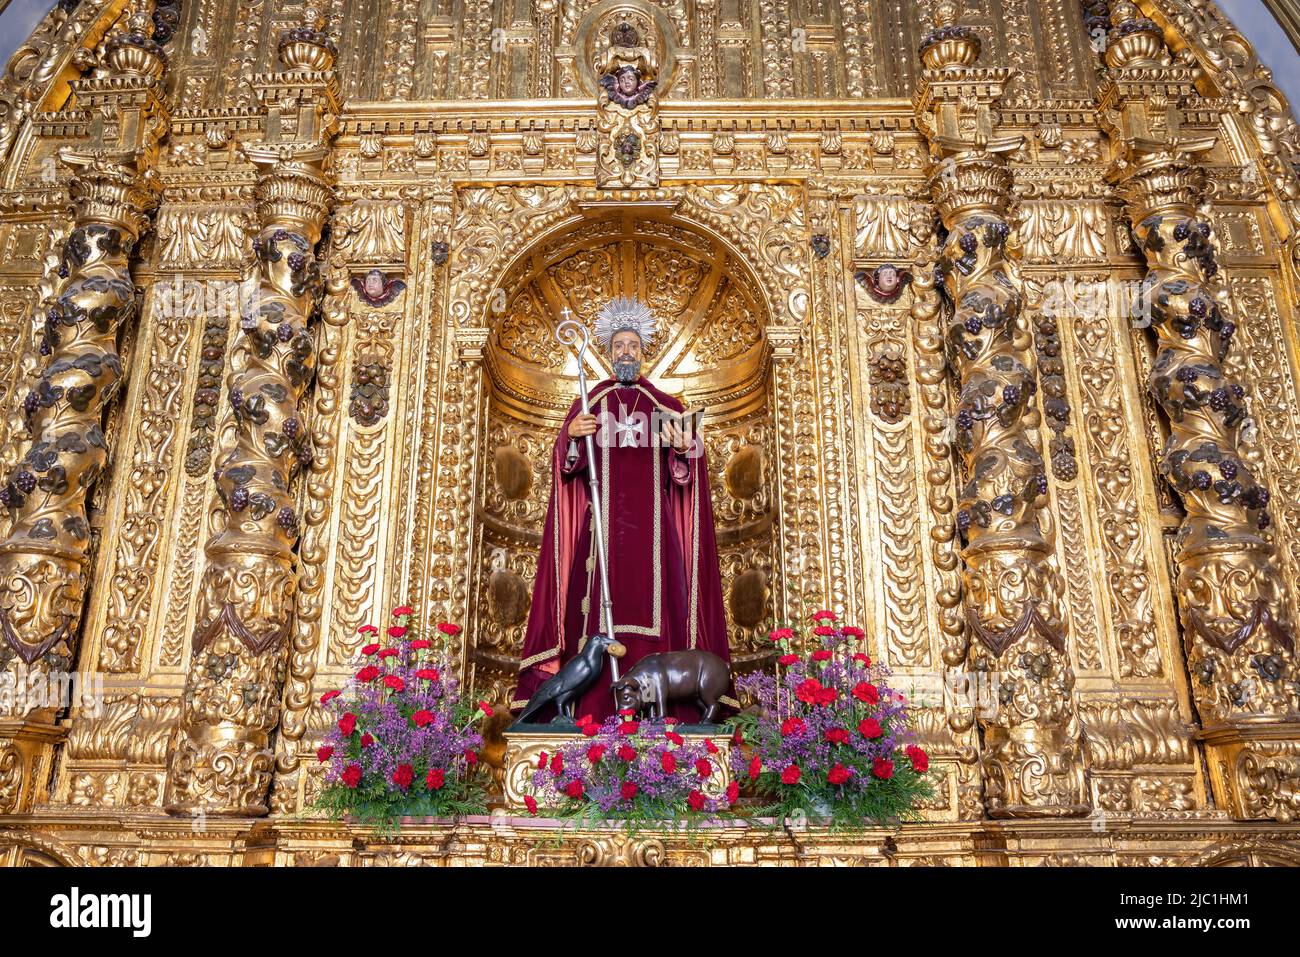 Trigueros, Huelva, Spain - April 17, 2022: Sculpture of San Antonio Abad (Saint Anthony Abbot),saint of trigueros, in its golden chapel Stock Photo